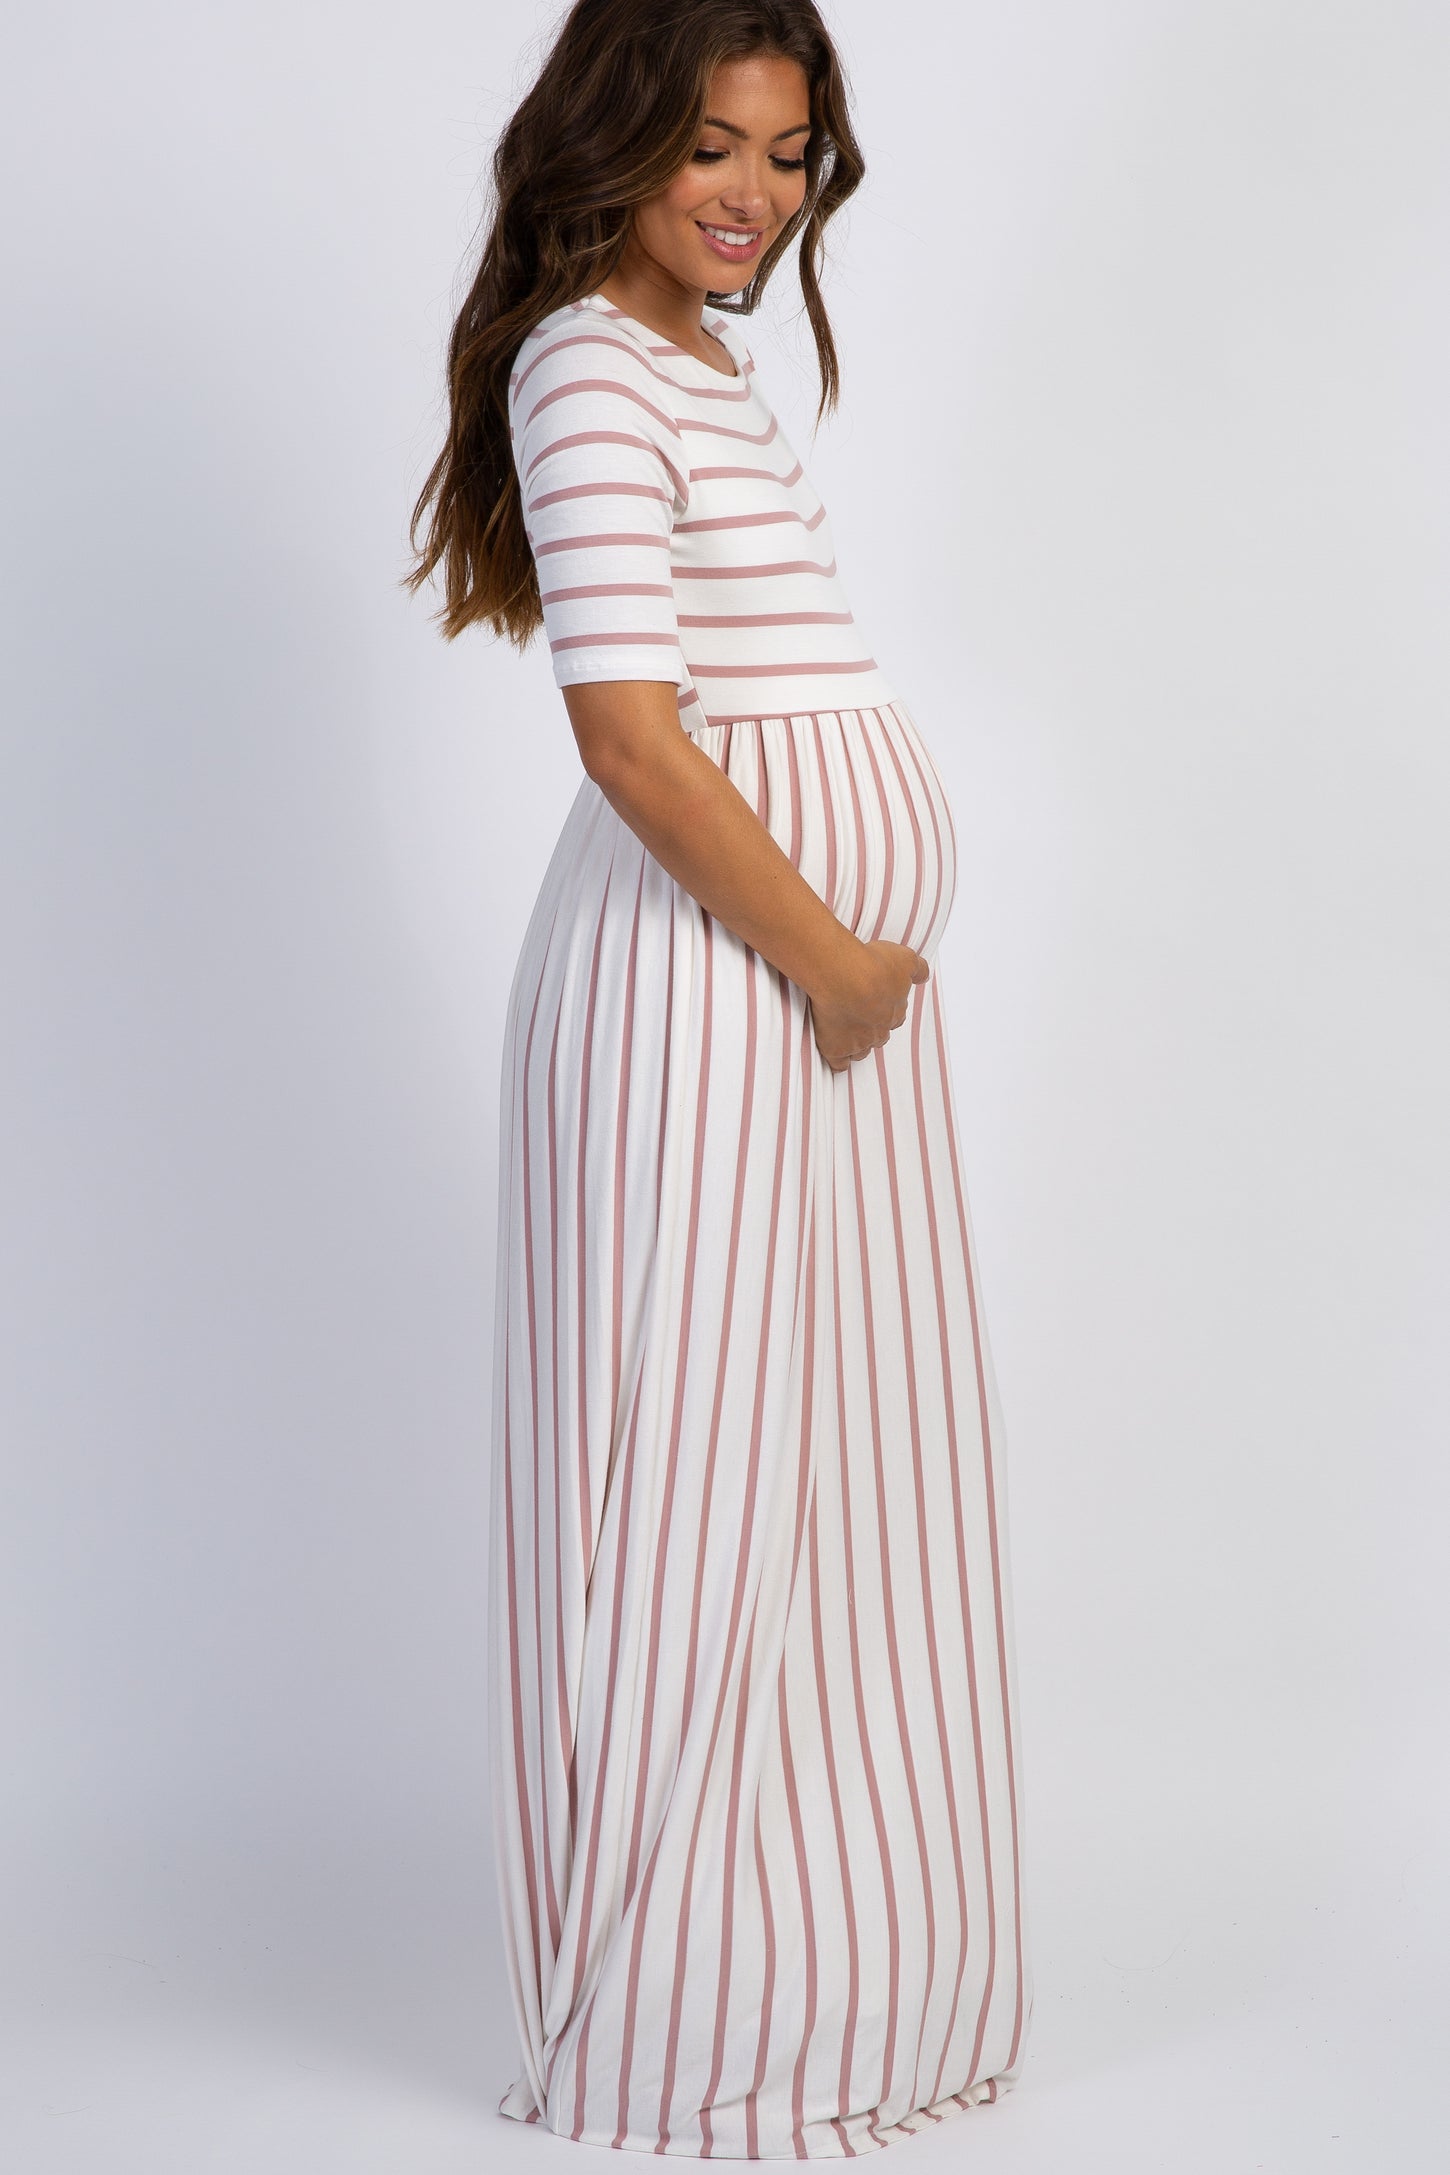 PinkBlush Mauve Striped Half Sleeve Maternity Maxi Dress